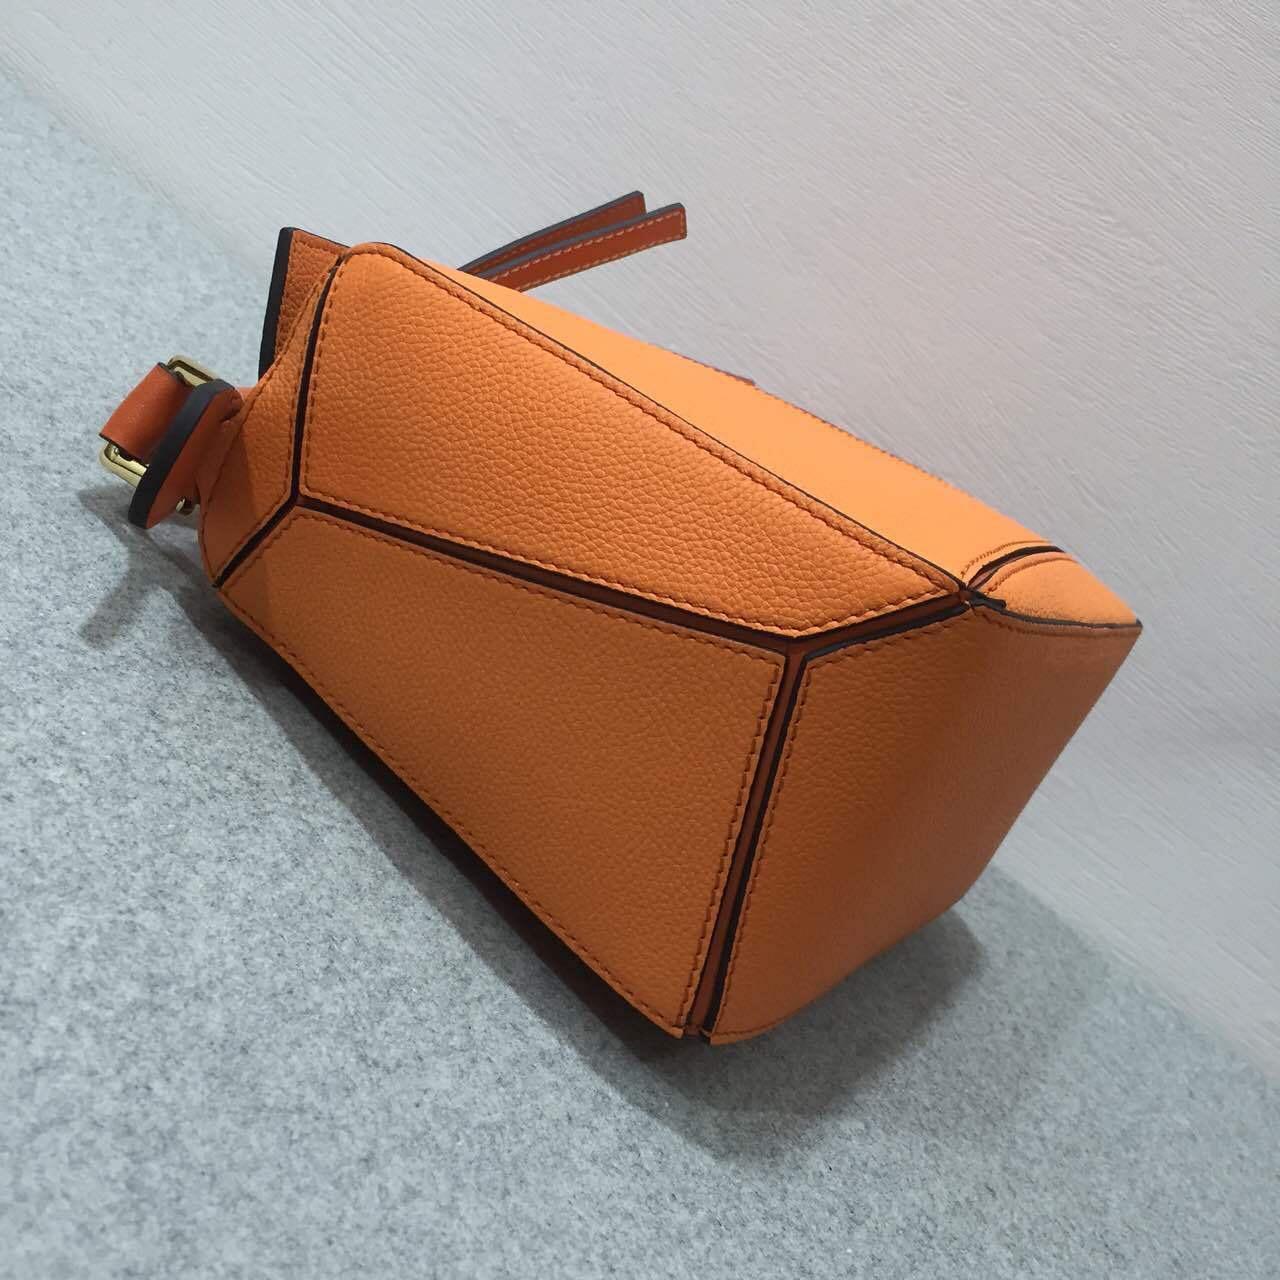 Loewe羅意威小號幾何包 Puzzle Small Bag Apricot/Orange 顆粒小牛皮